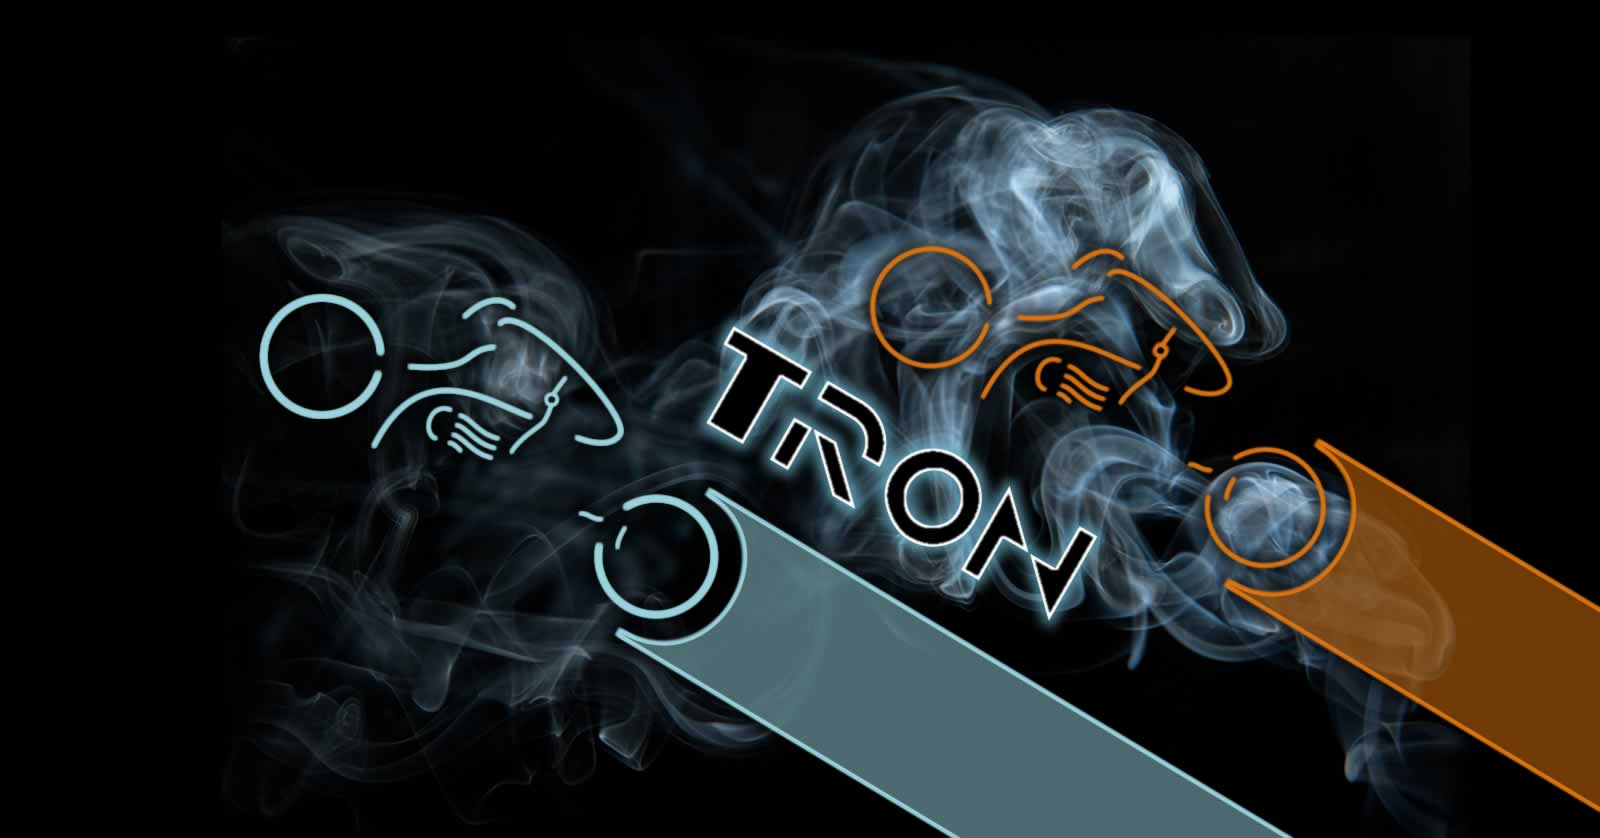 New Tron Design